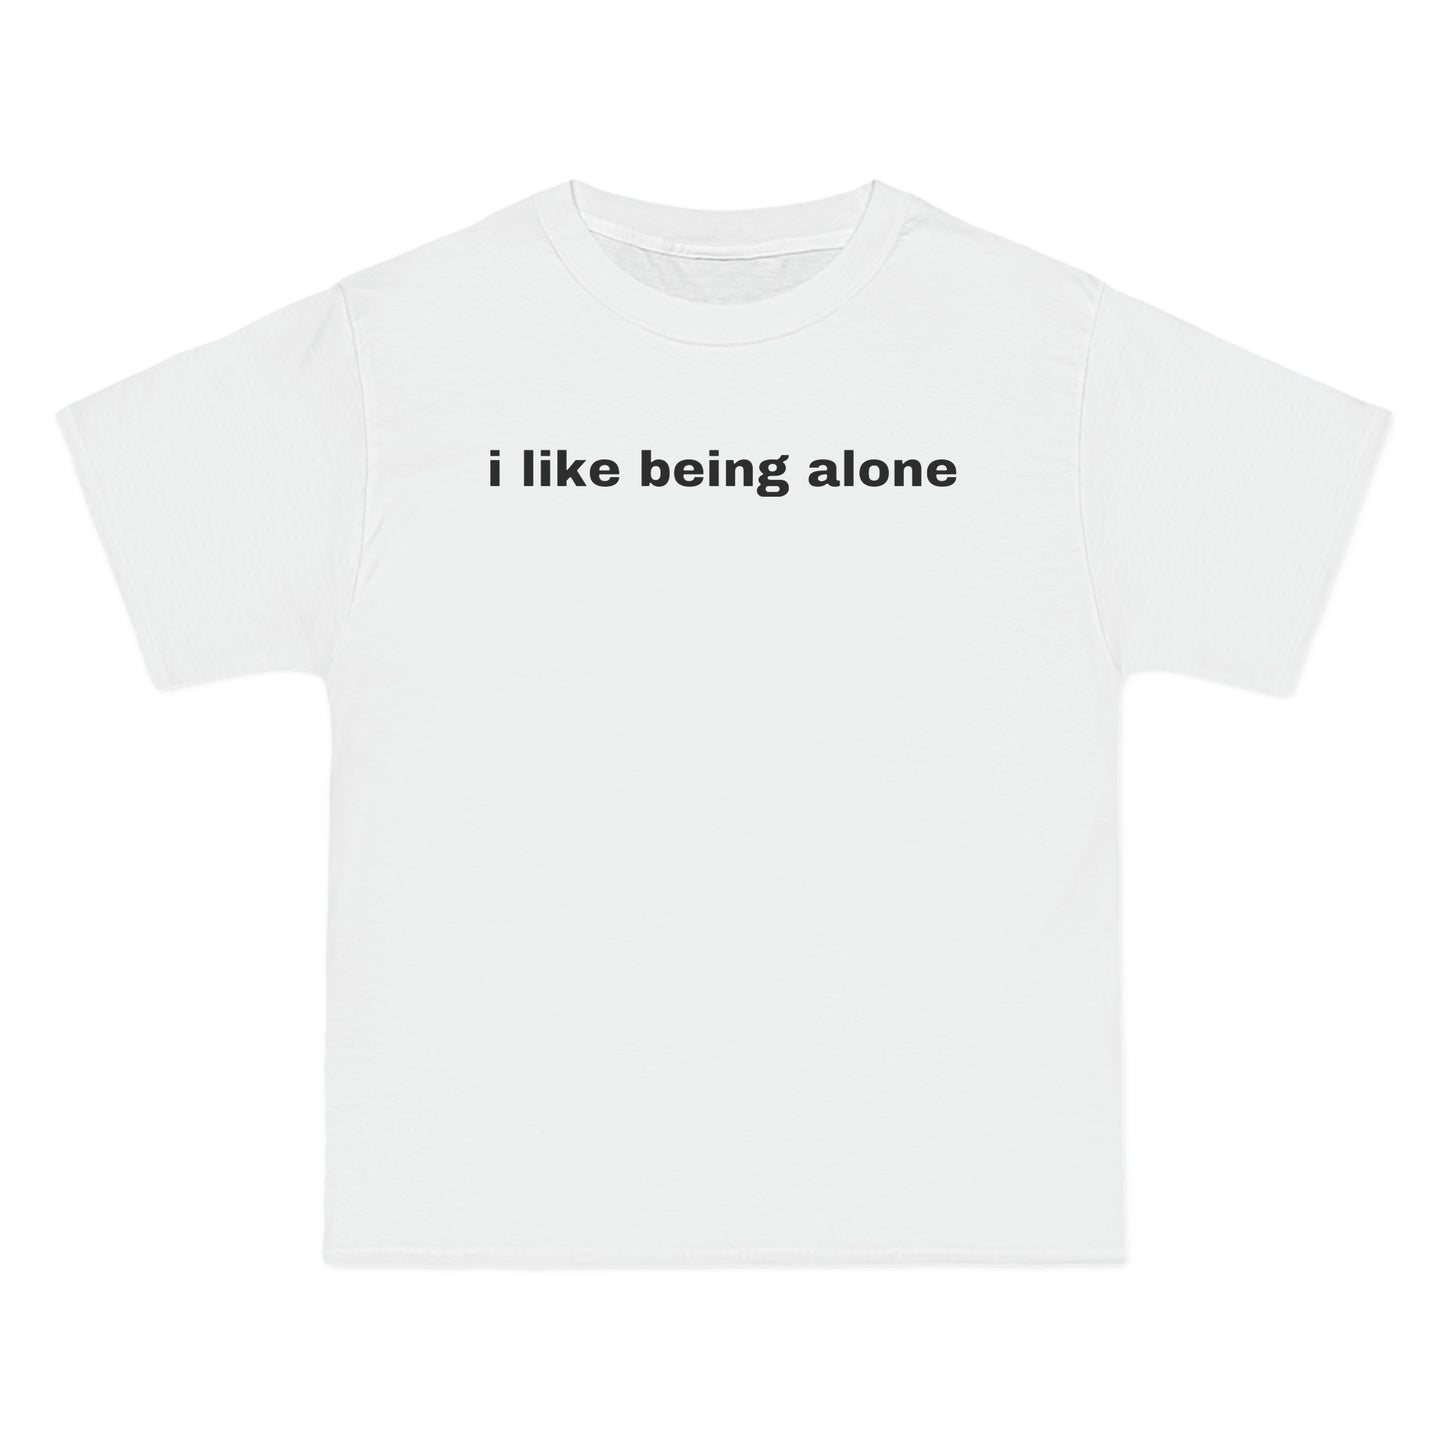 i like being alone Tee